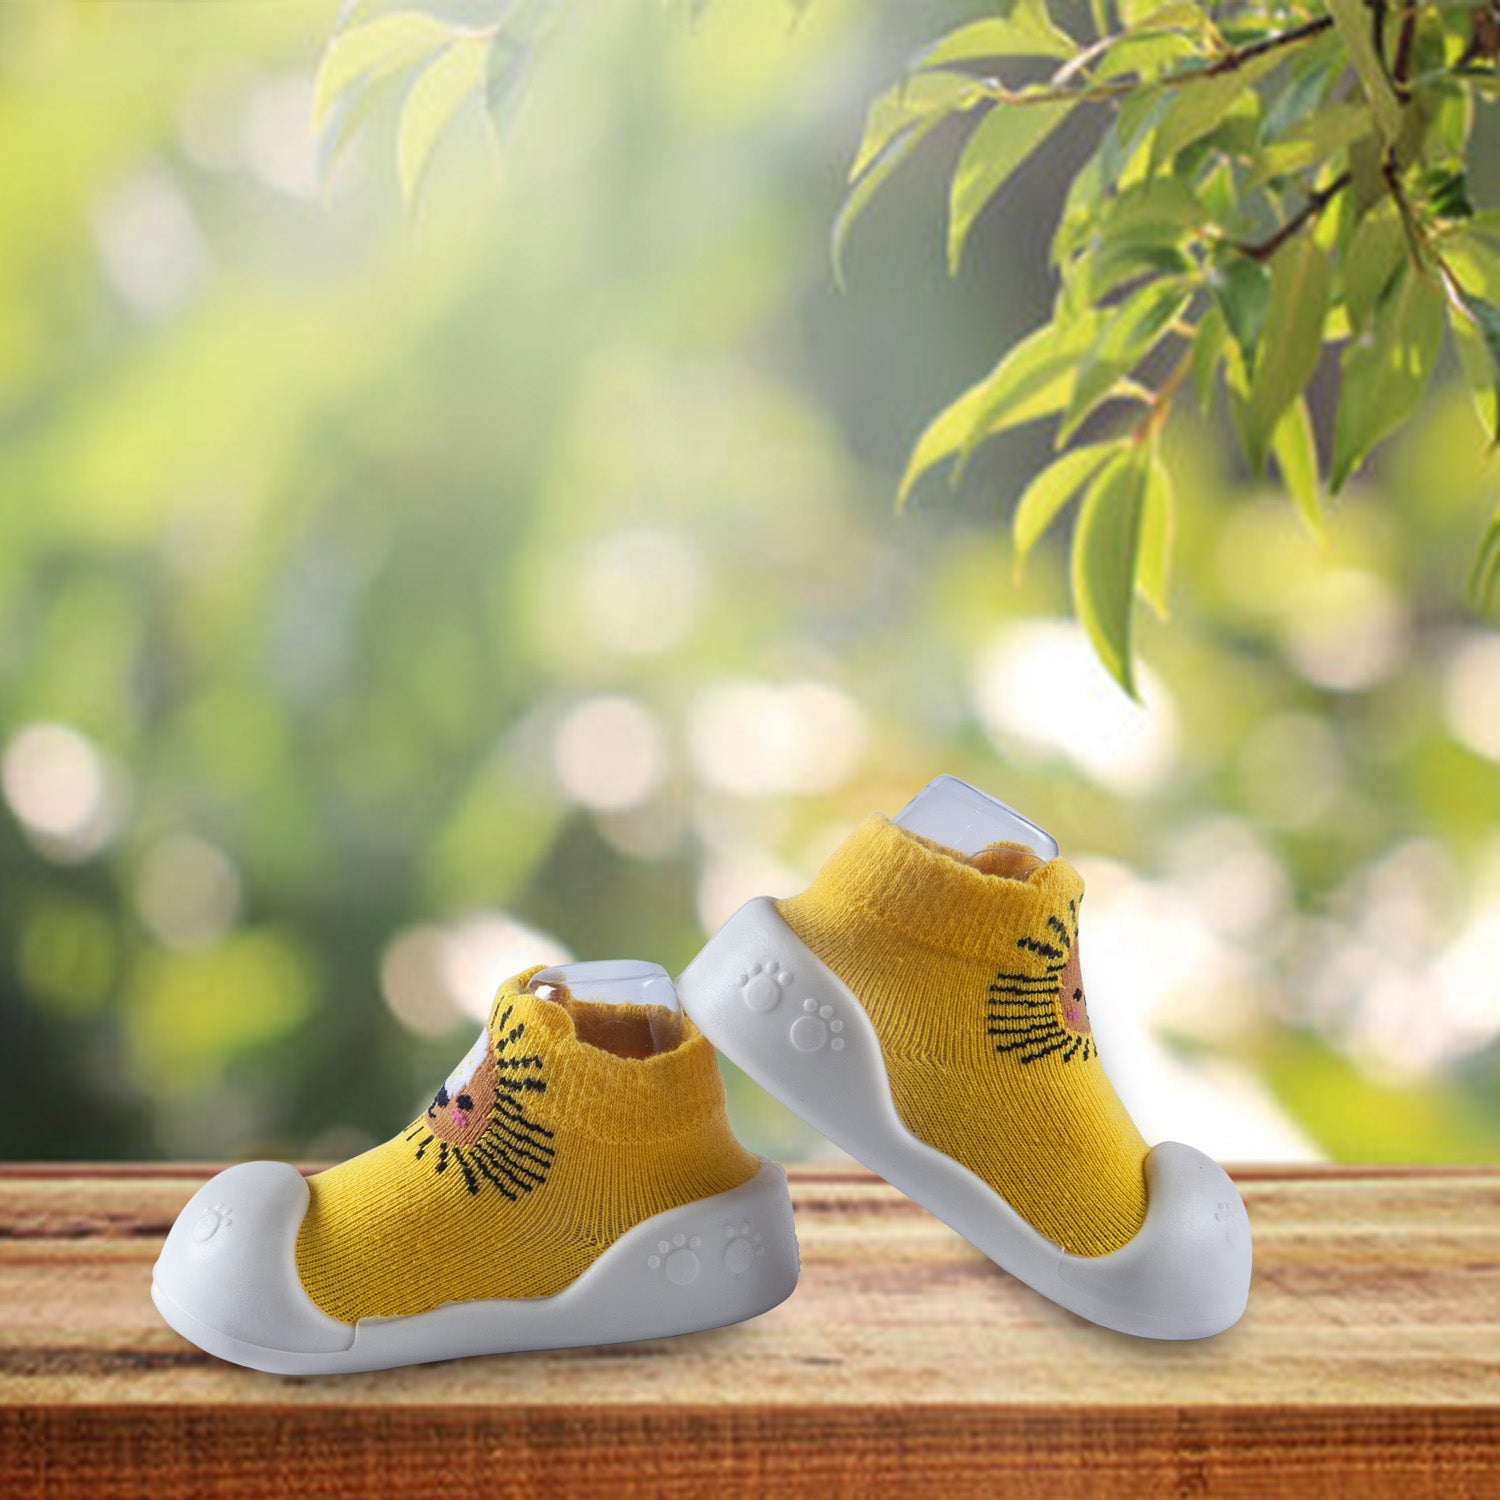 Newborn Anti-Skid Rubber Sole Slip-On Shoes Lion - Yellow